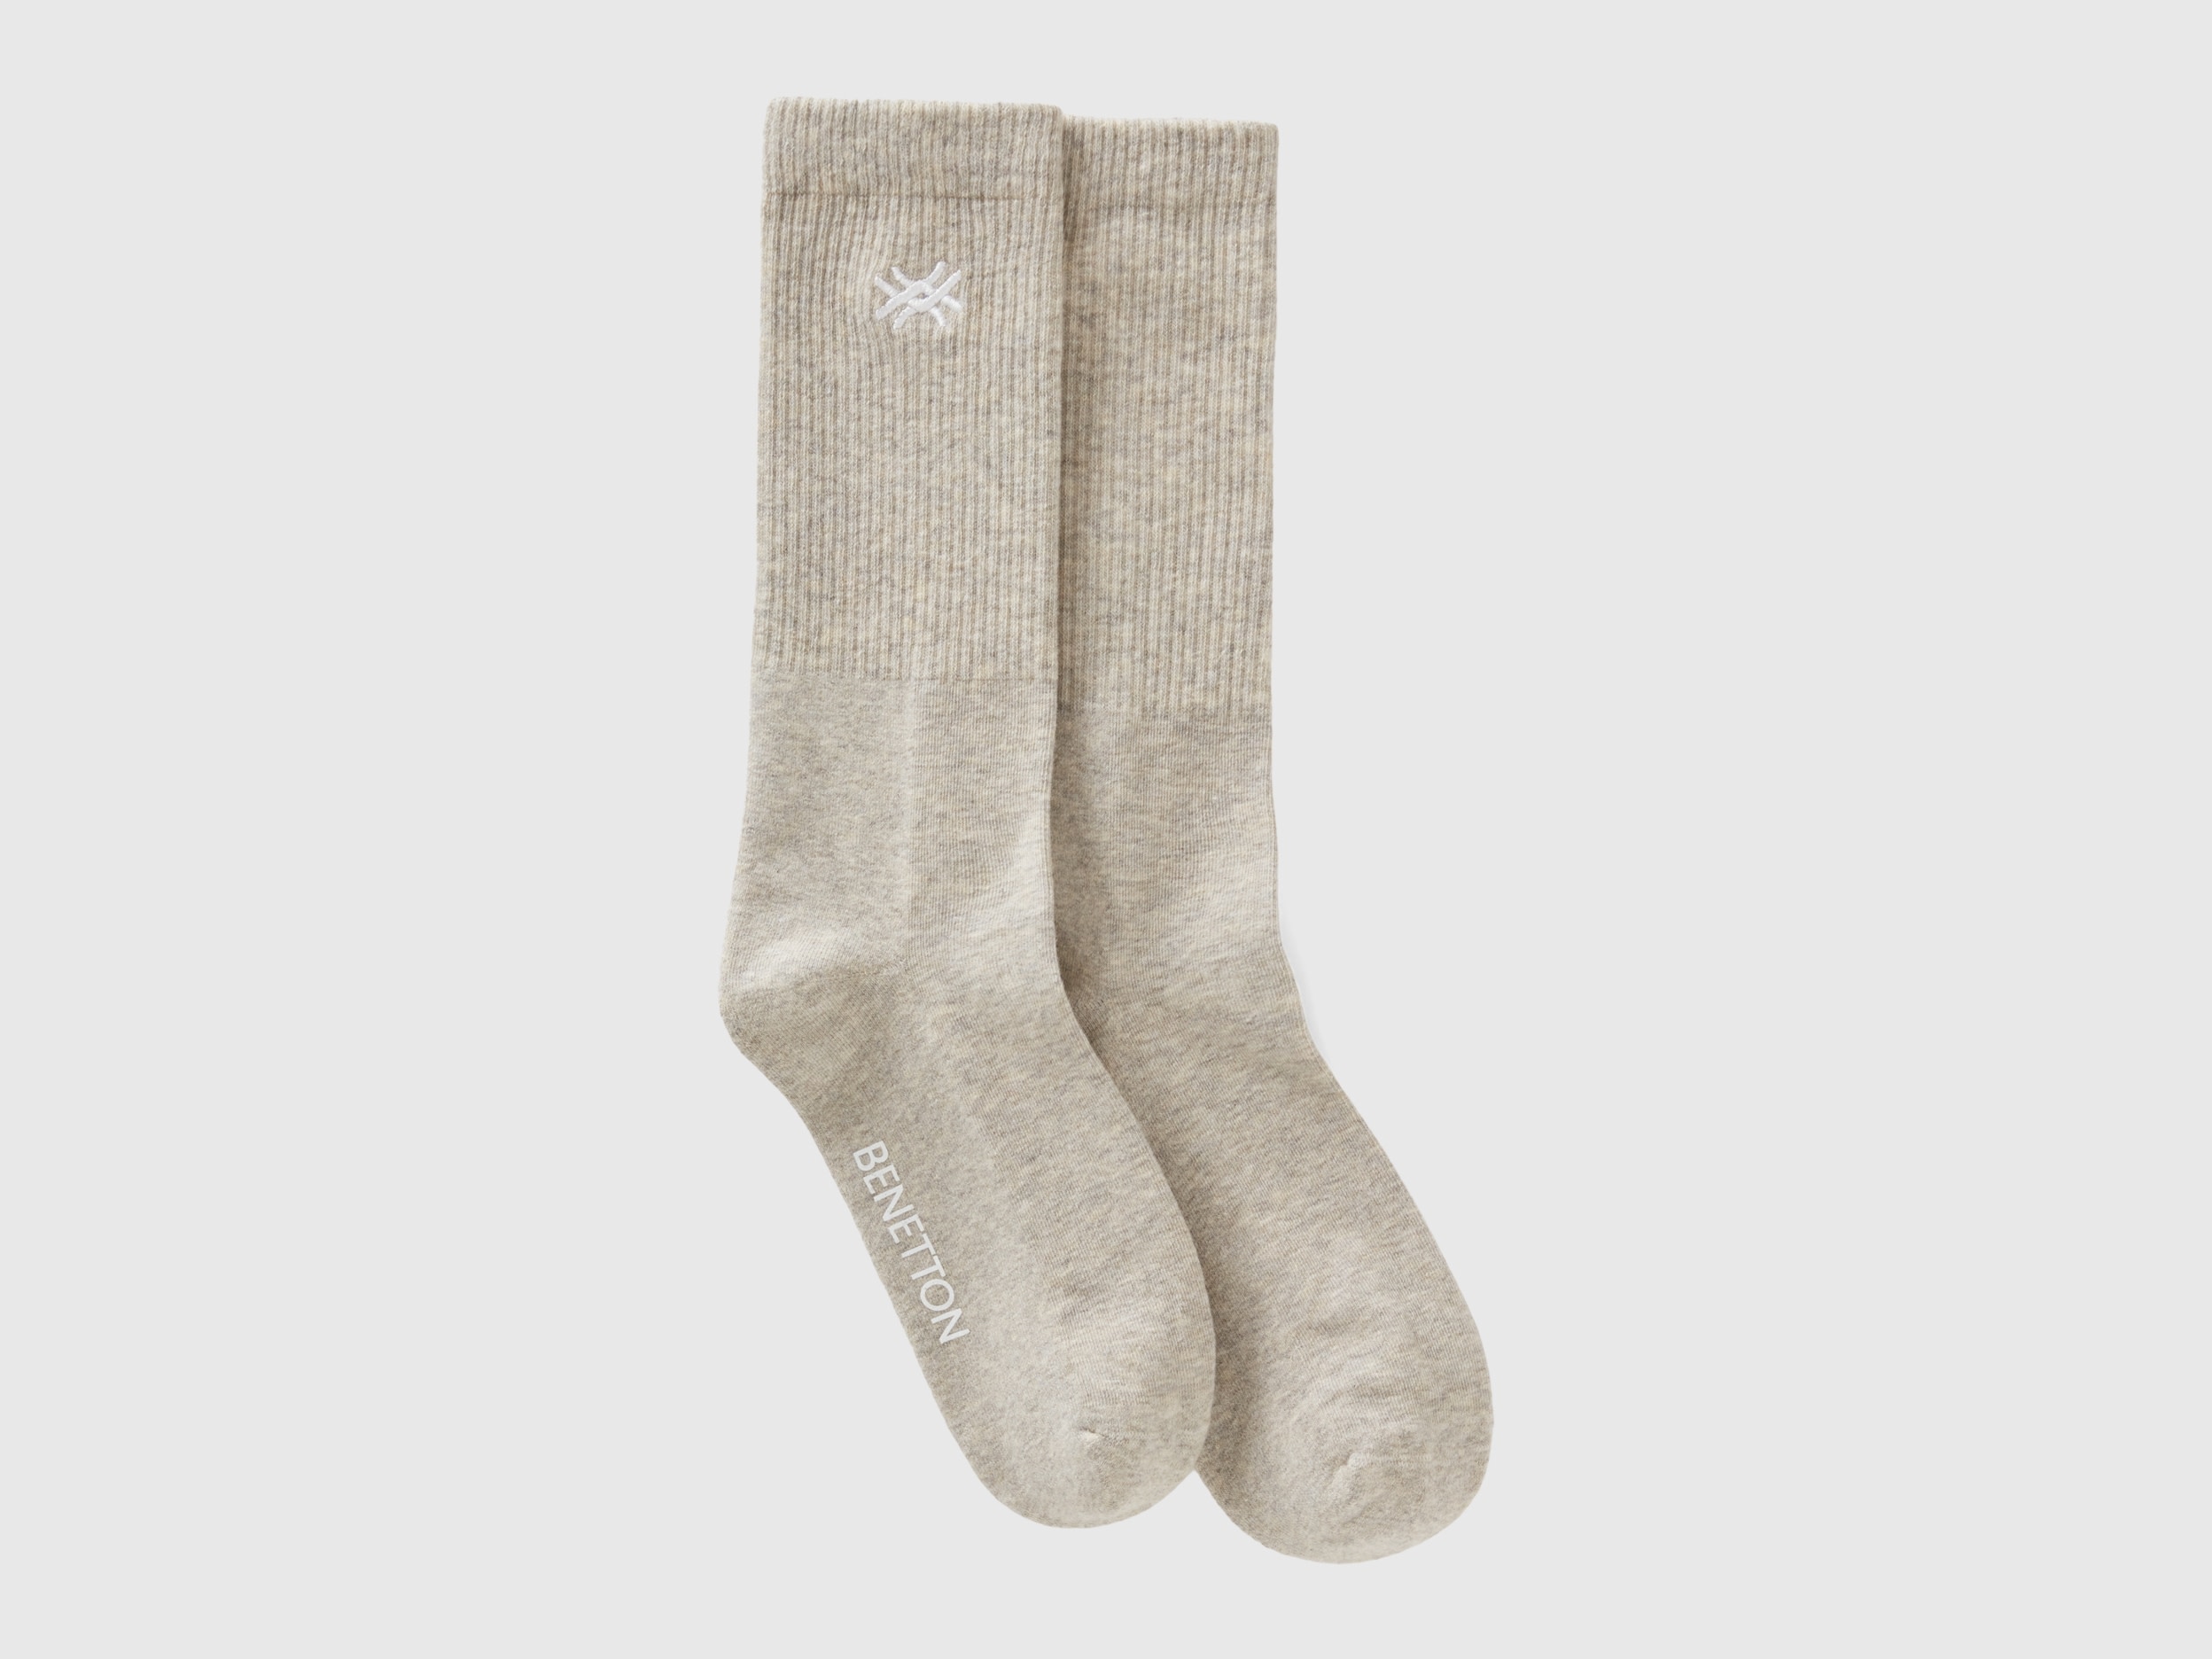 Benetton, Sporty Socks In Organic Cotton Blend, size 8-11, Gray, Women